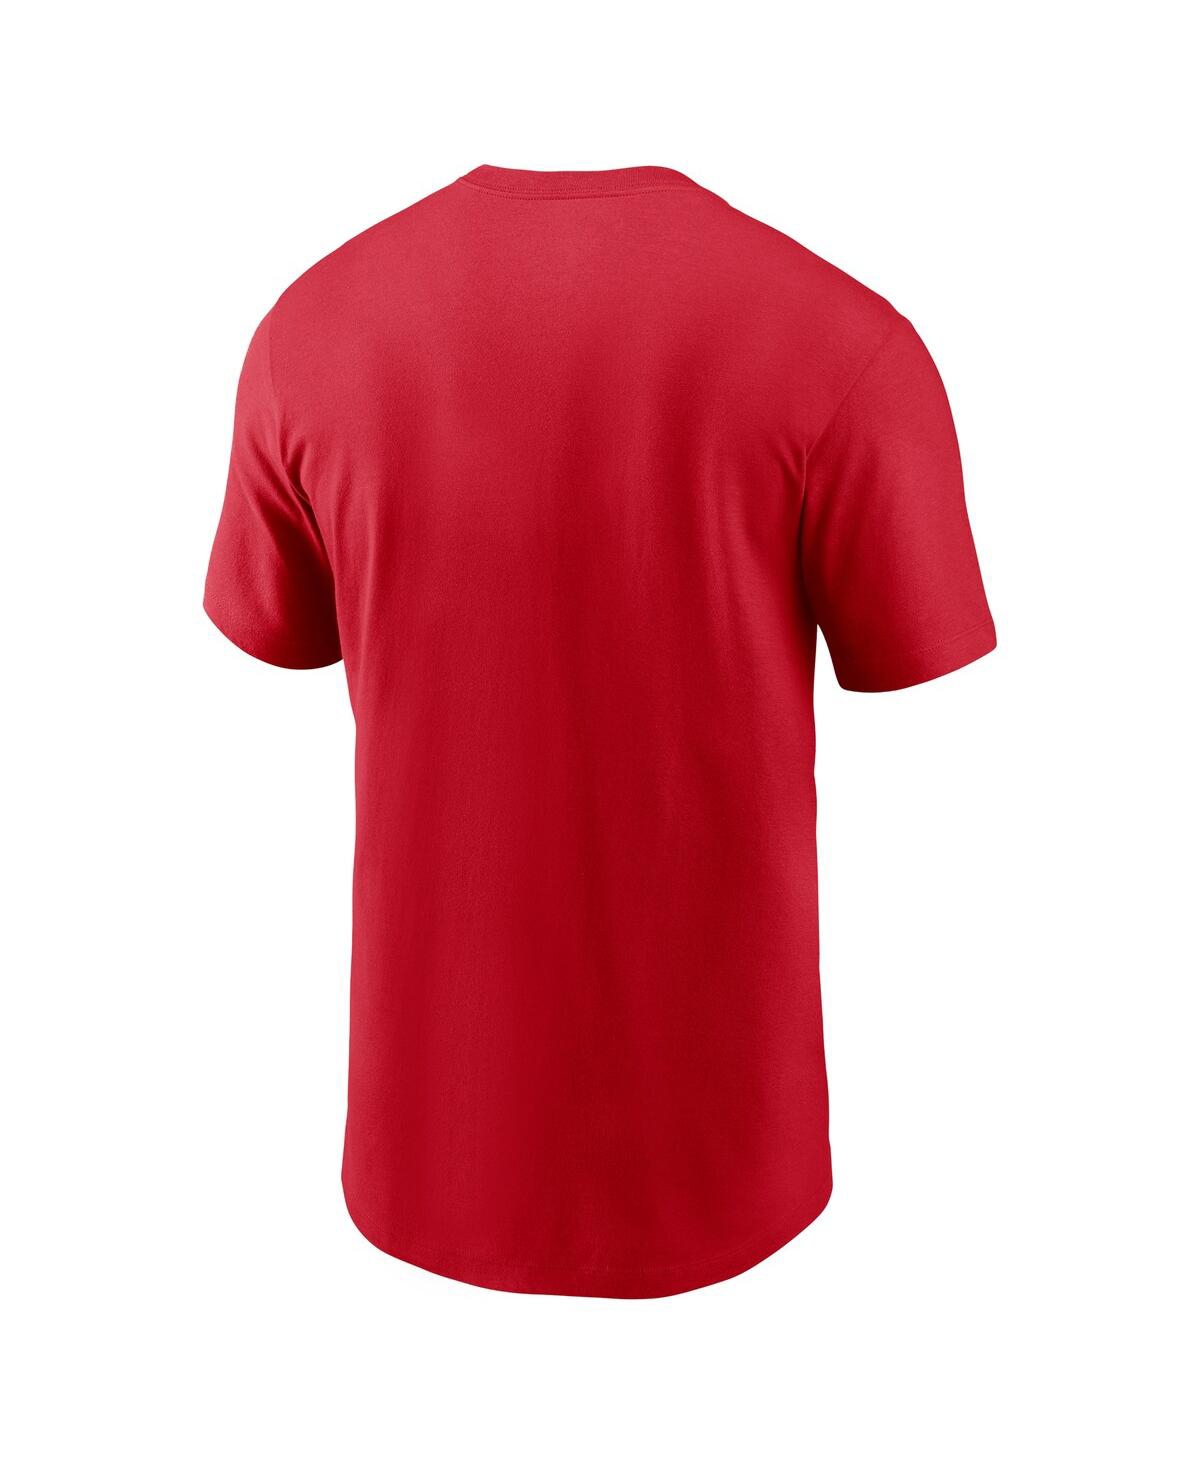 Shop Nike Men's  Red Philadelphia Phillies Fuse Wordmark T-shirt